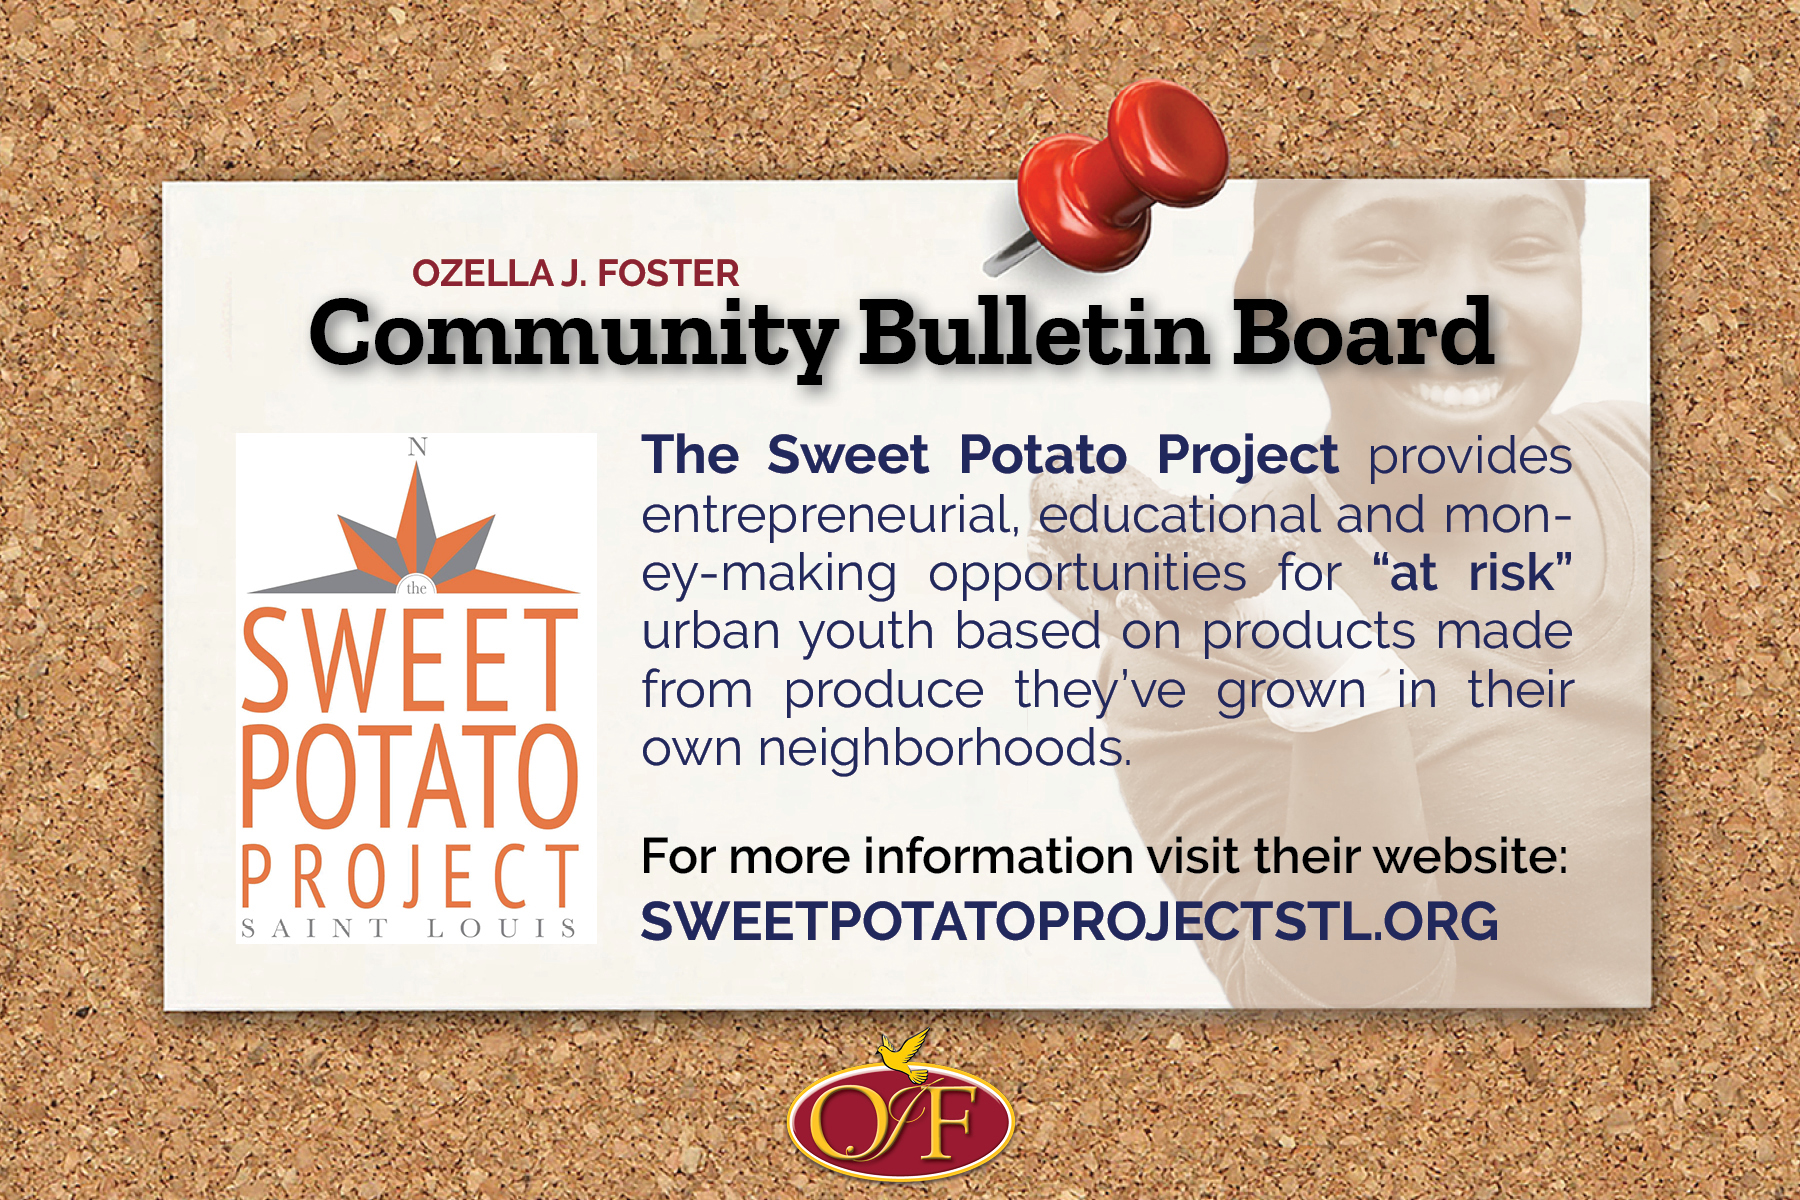 The Sweet Potato Project